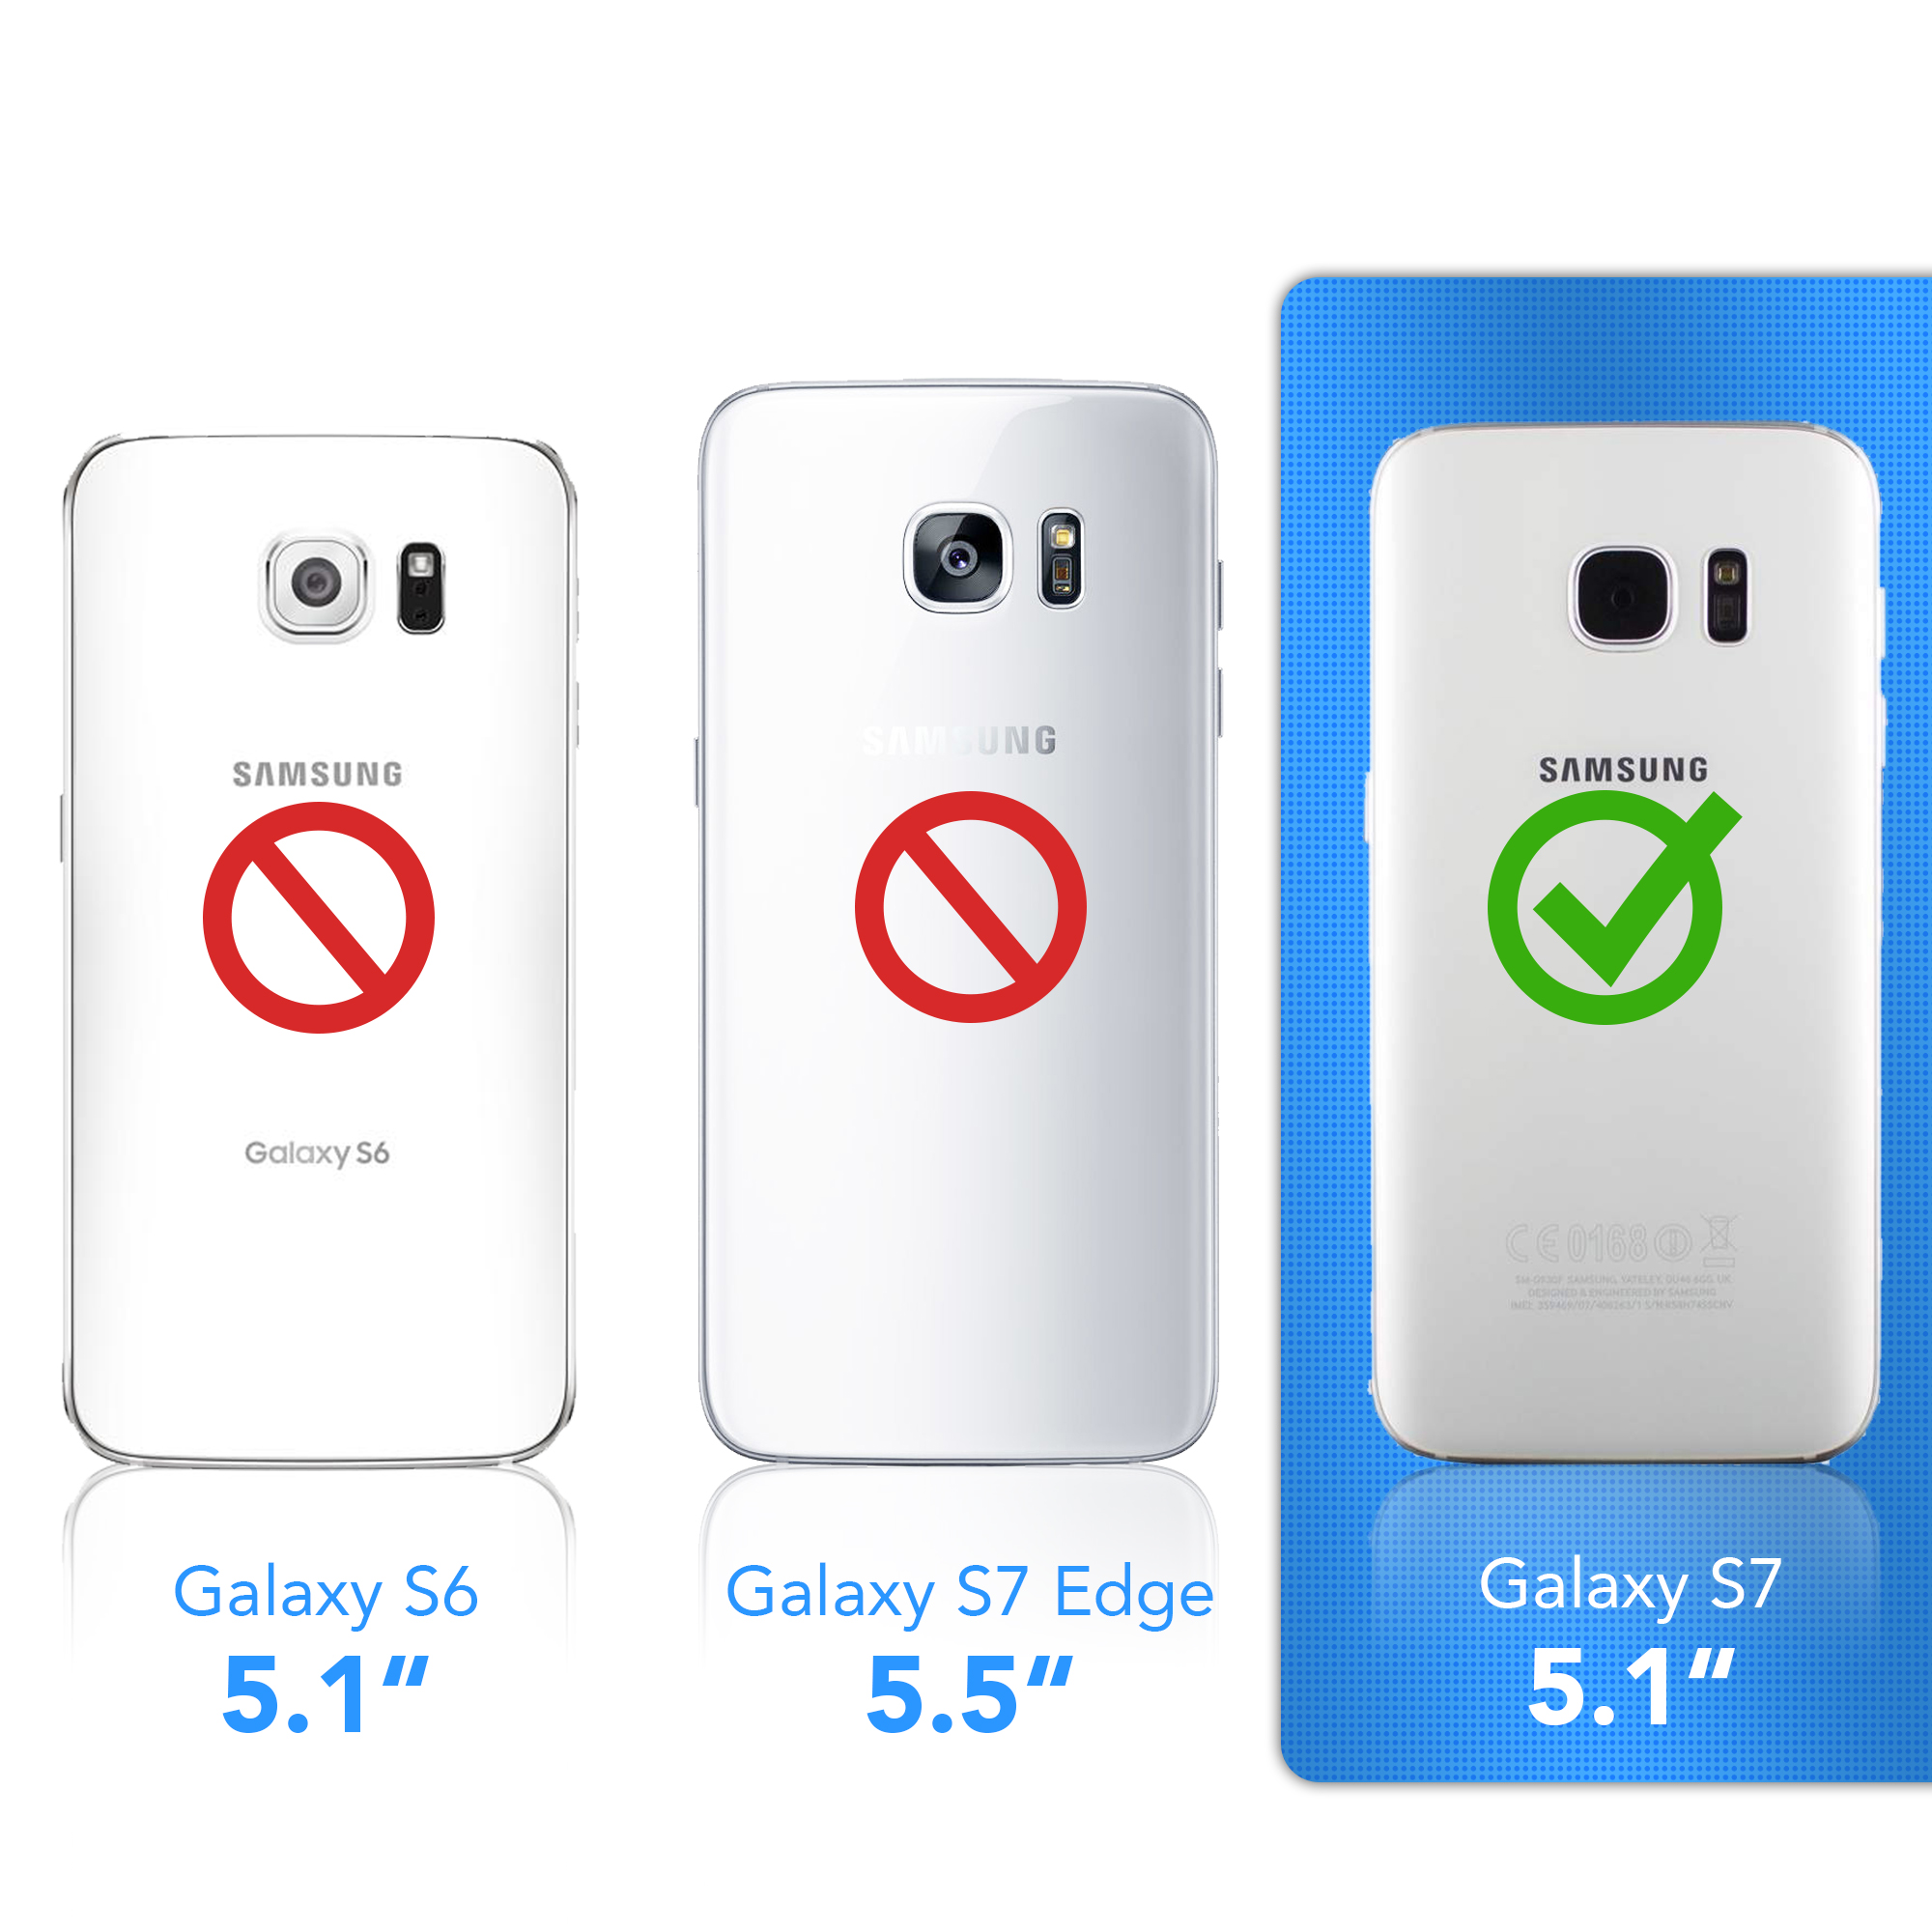 Samsung, Silber EAZY Glitzerhülle Galaxy Backcover, S7, Flüssig, CASE